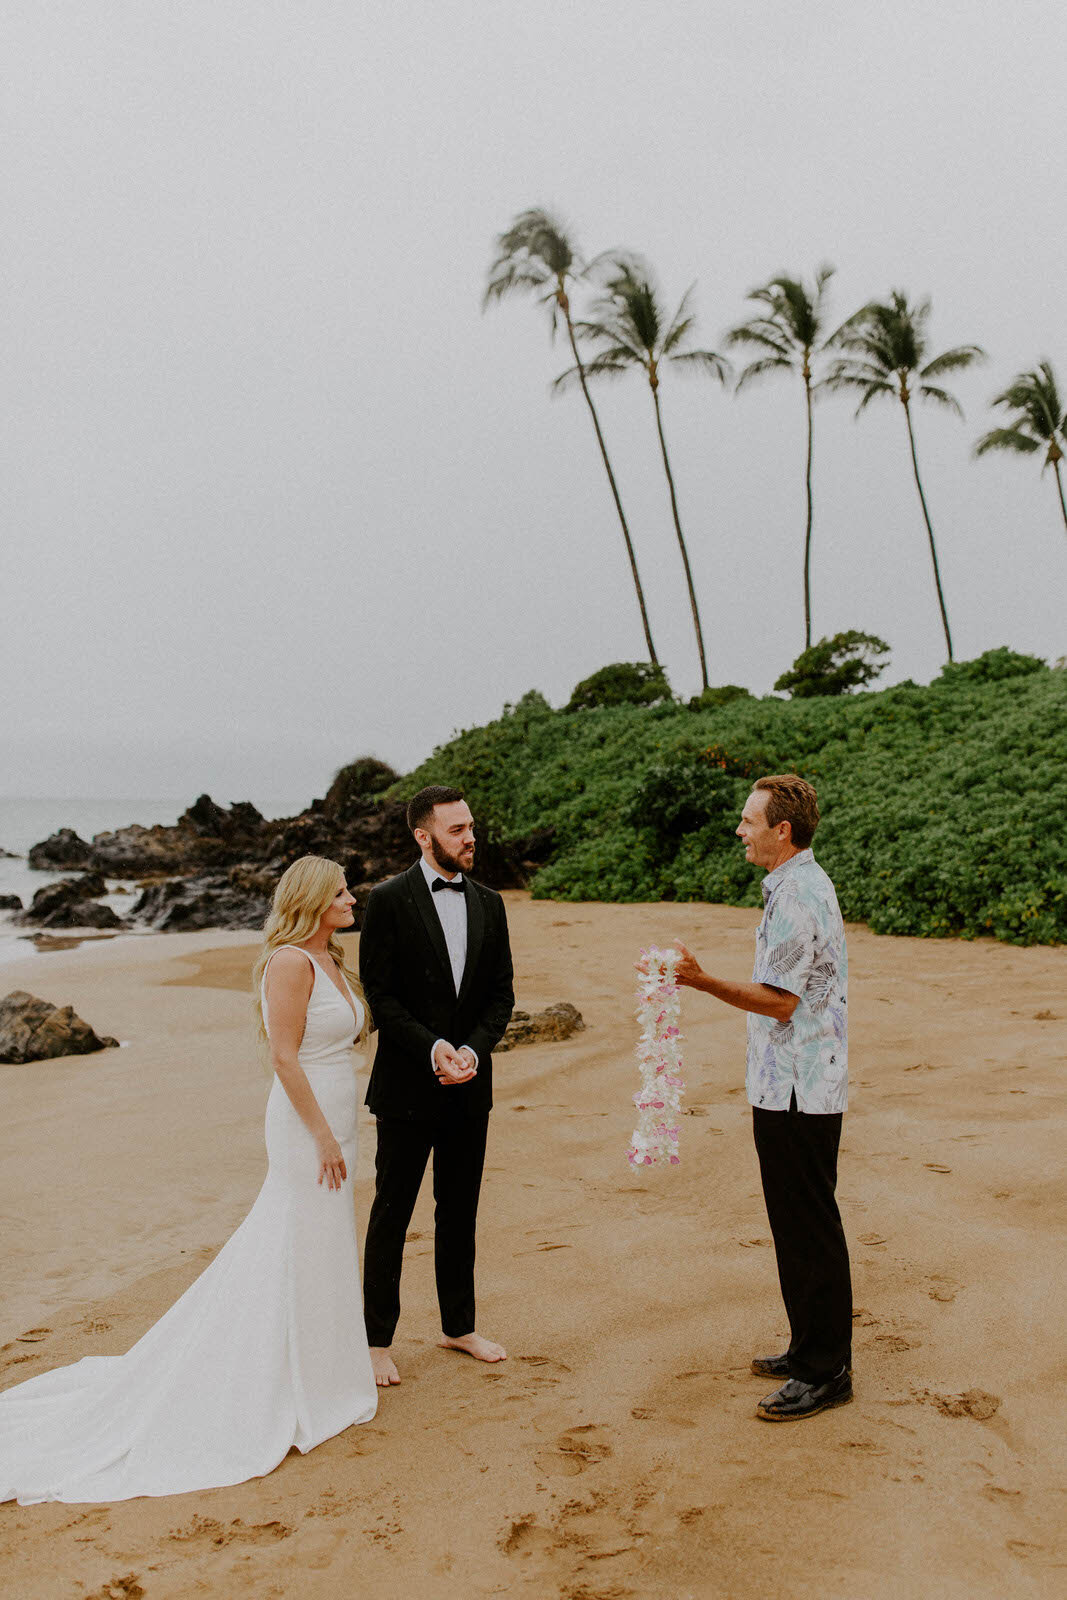 Brianna-Broyles-Photography-Fairmont-Kea-Lani-Wedding-Maui-Photographer-32.jpg